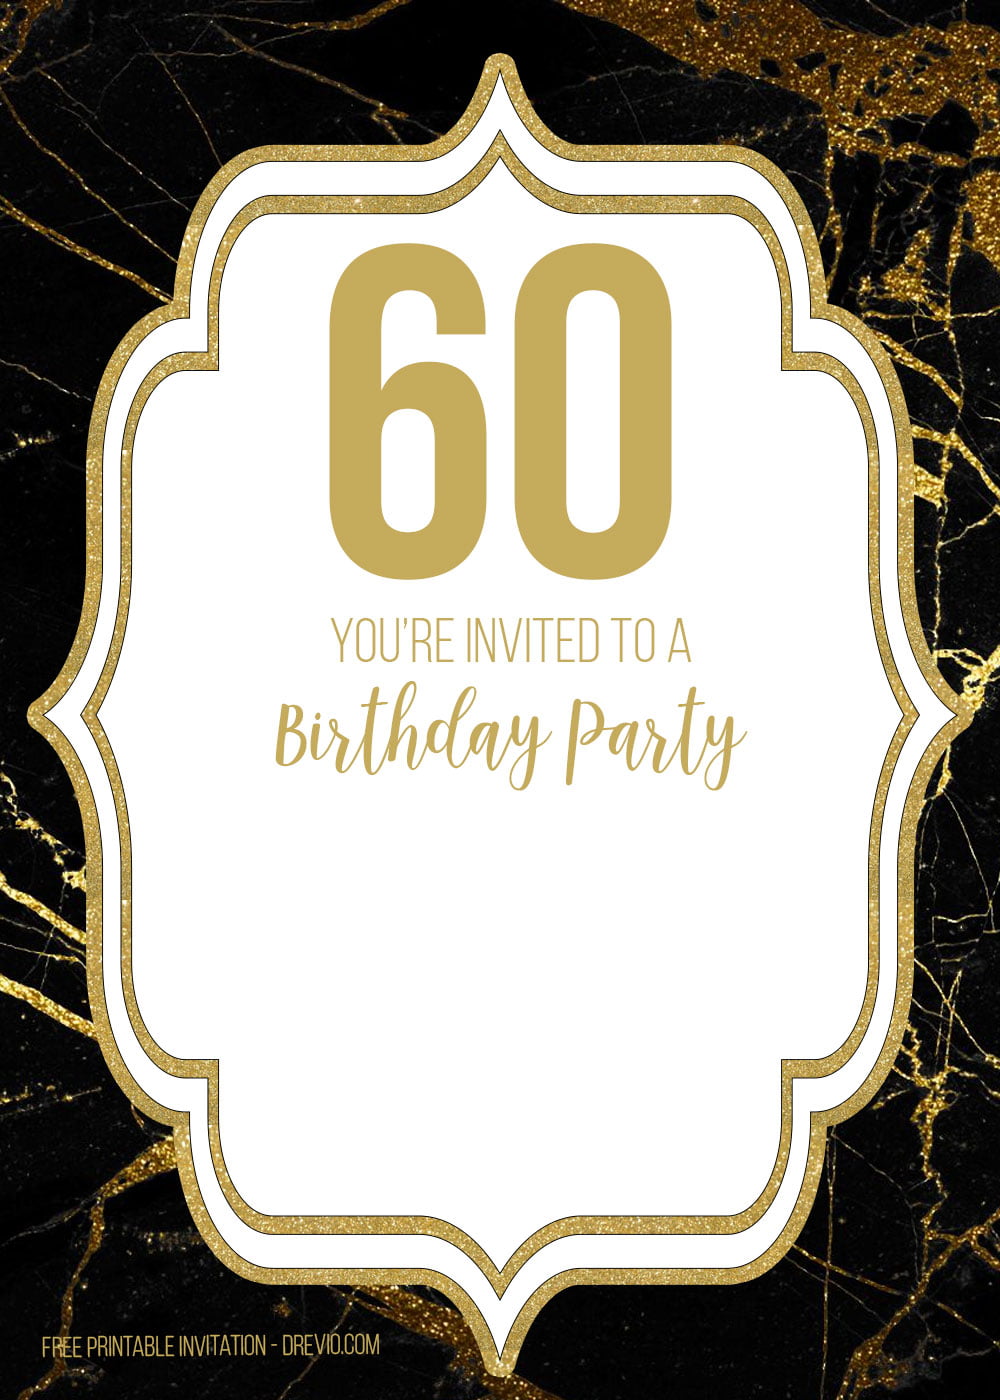 FREE Printable Black and Gold 60th Birthday Invitation Templates